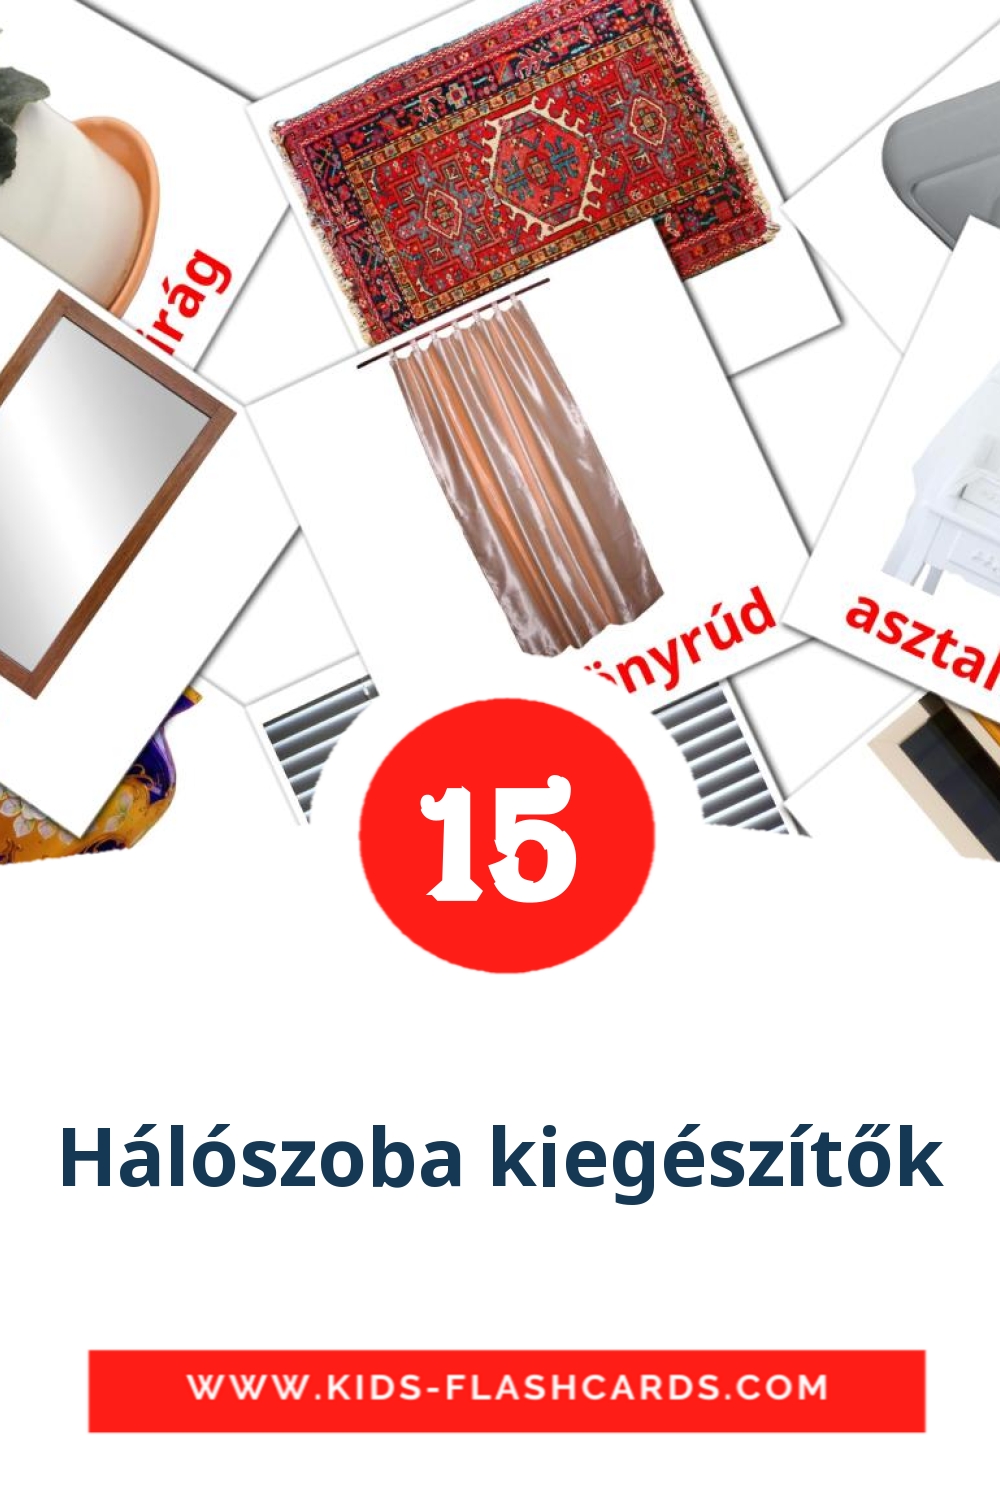 15 carte illustrate di Hálószoba kiegészítők per la scuola materna in hungarian